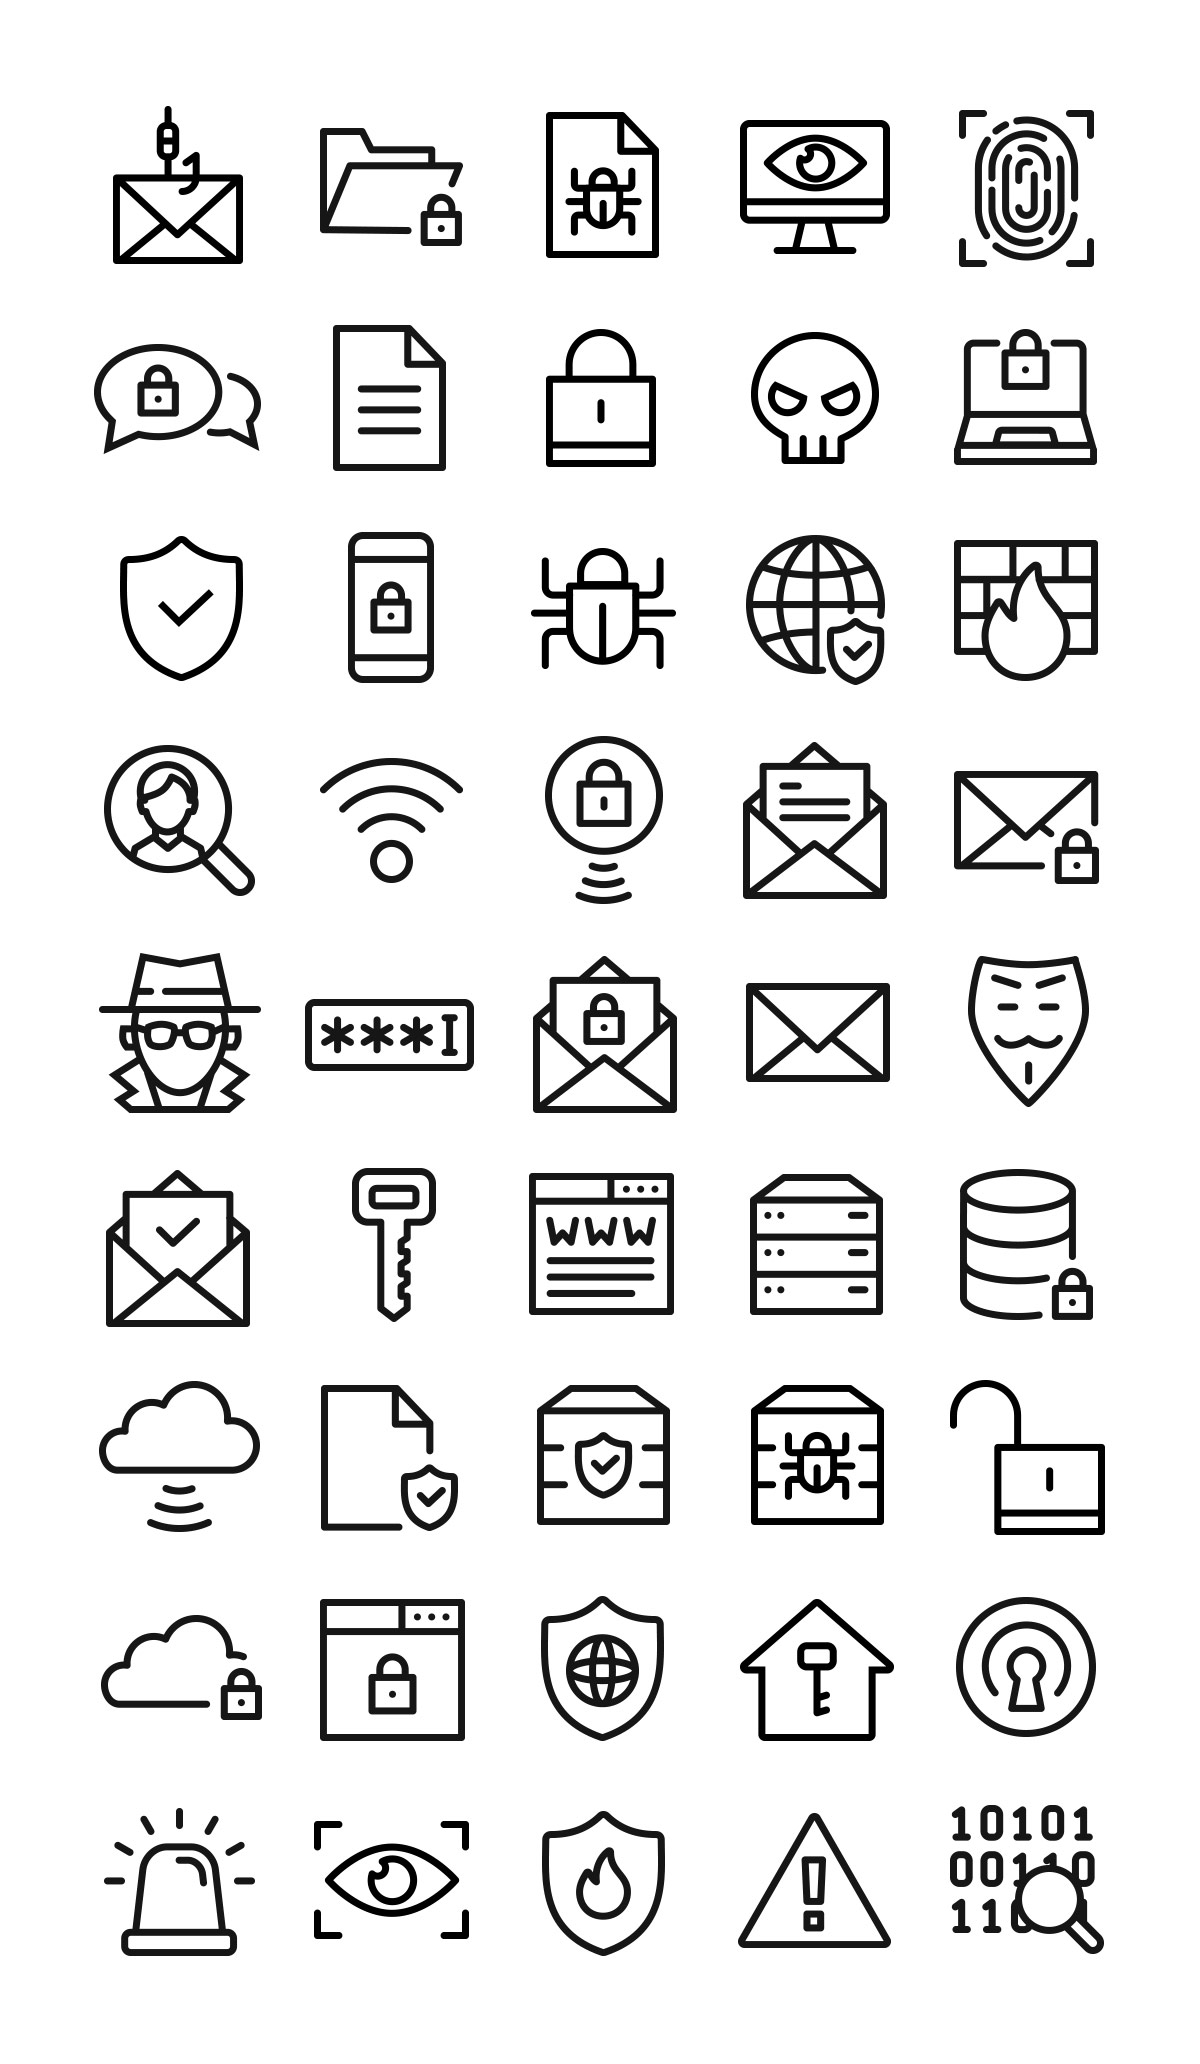 Digital Privacy free icons set